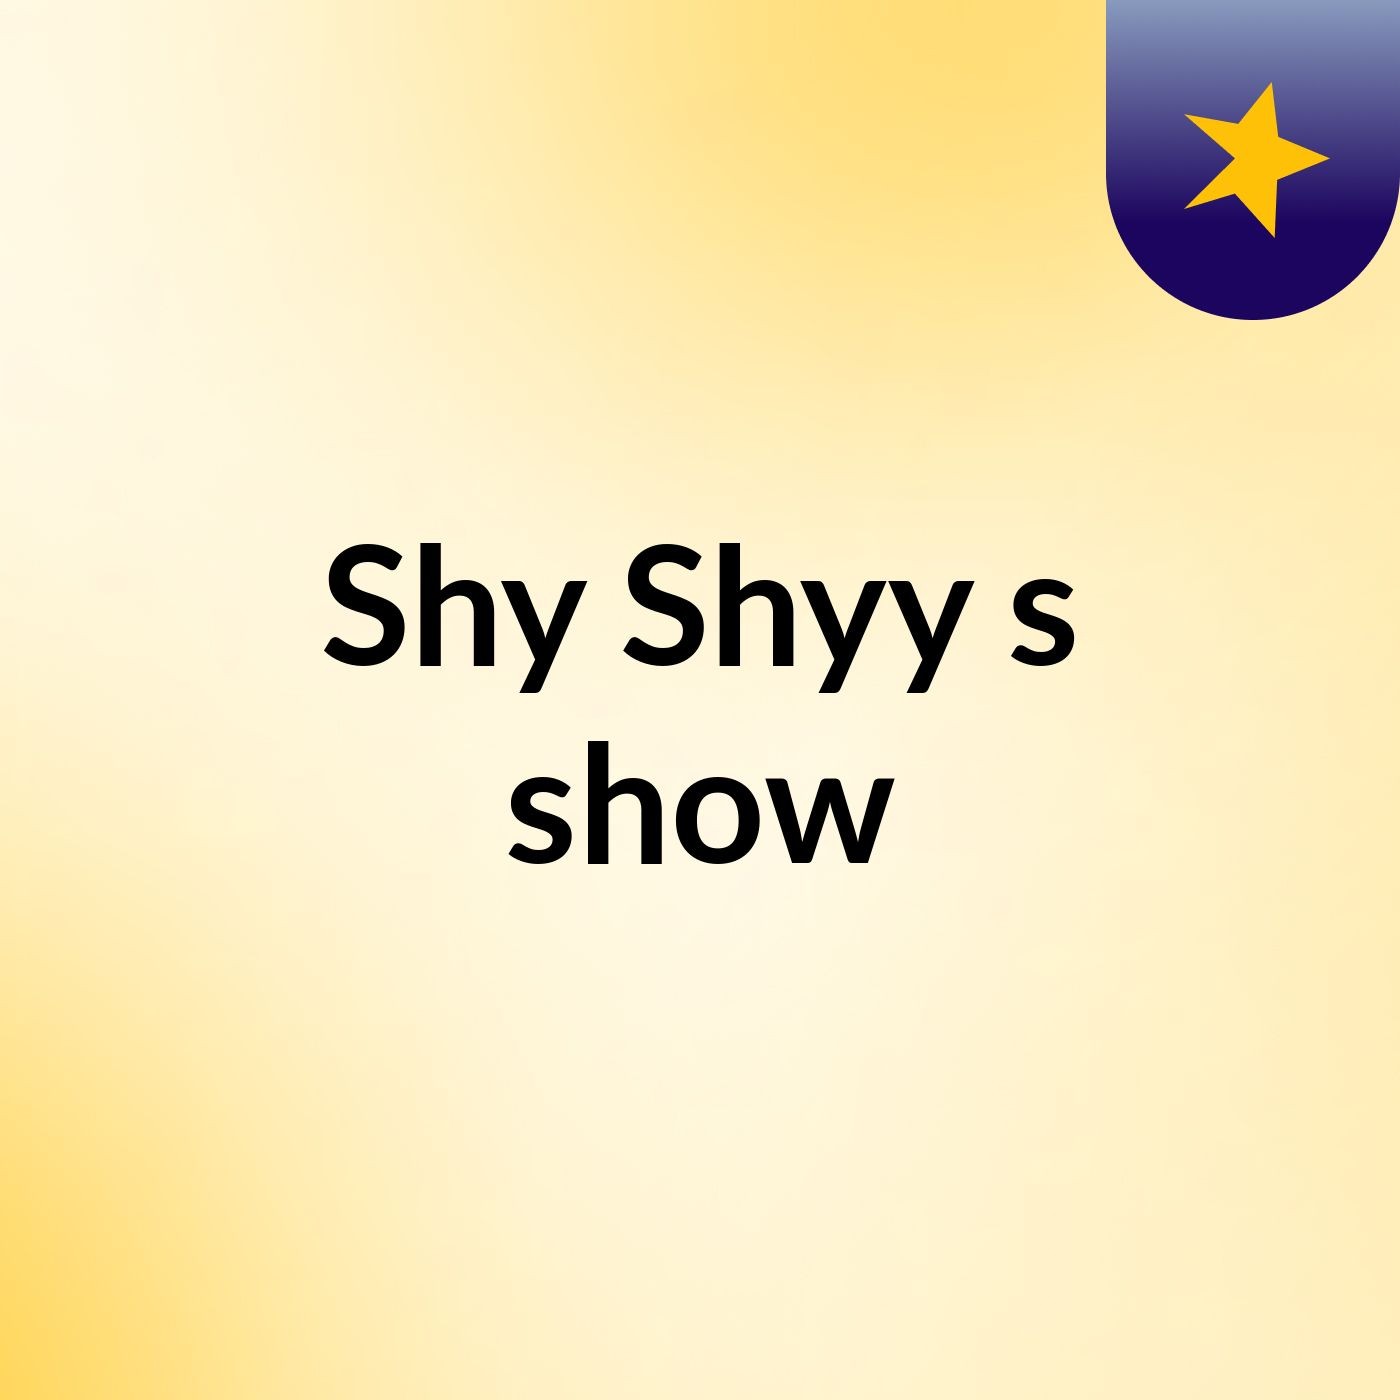 Episode 2 - Shy Shyy's show